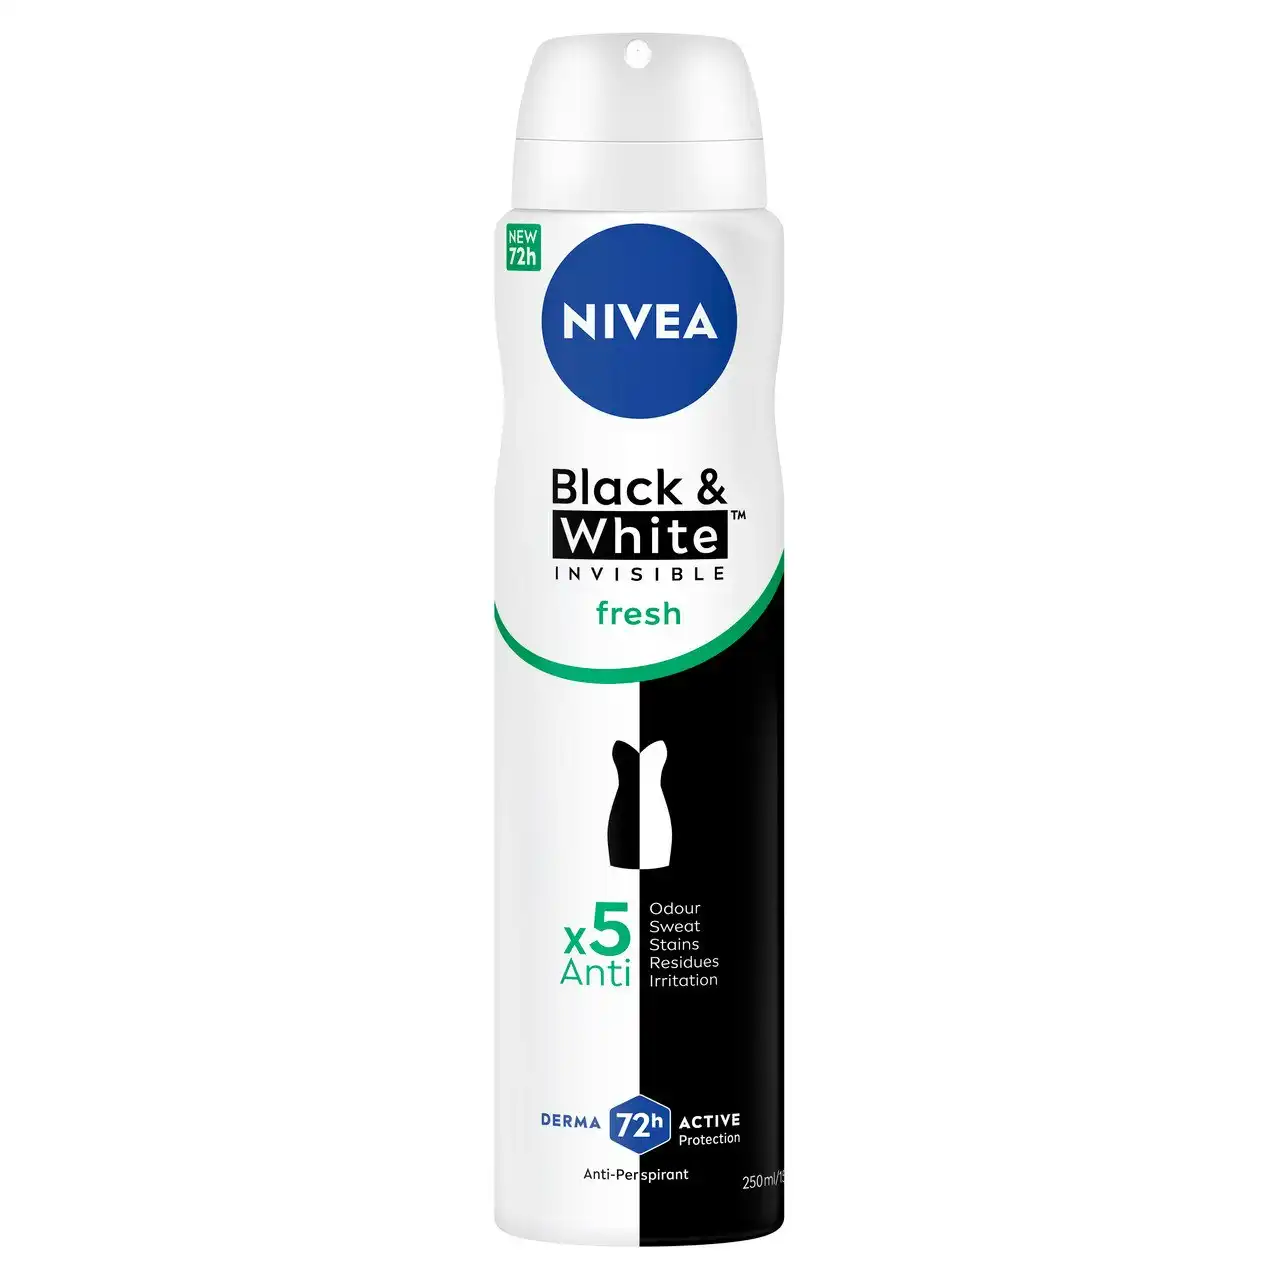 Nivea Black & White Invisible Fresh Anti-Perspirant Aerosol Deodorant 250ml